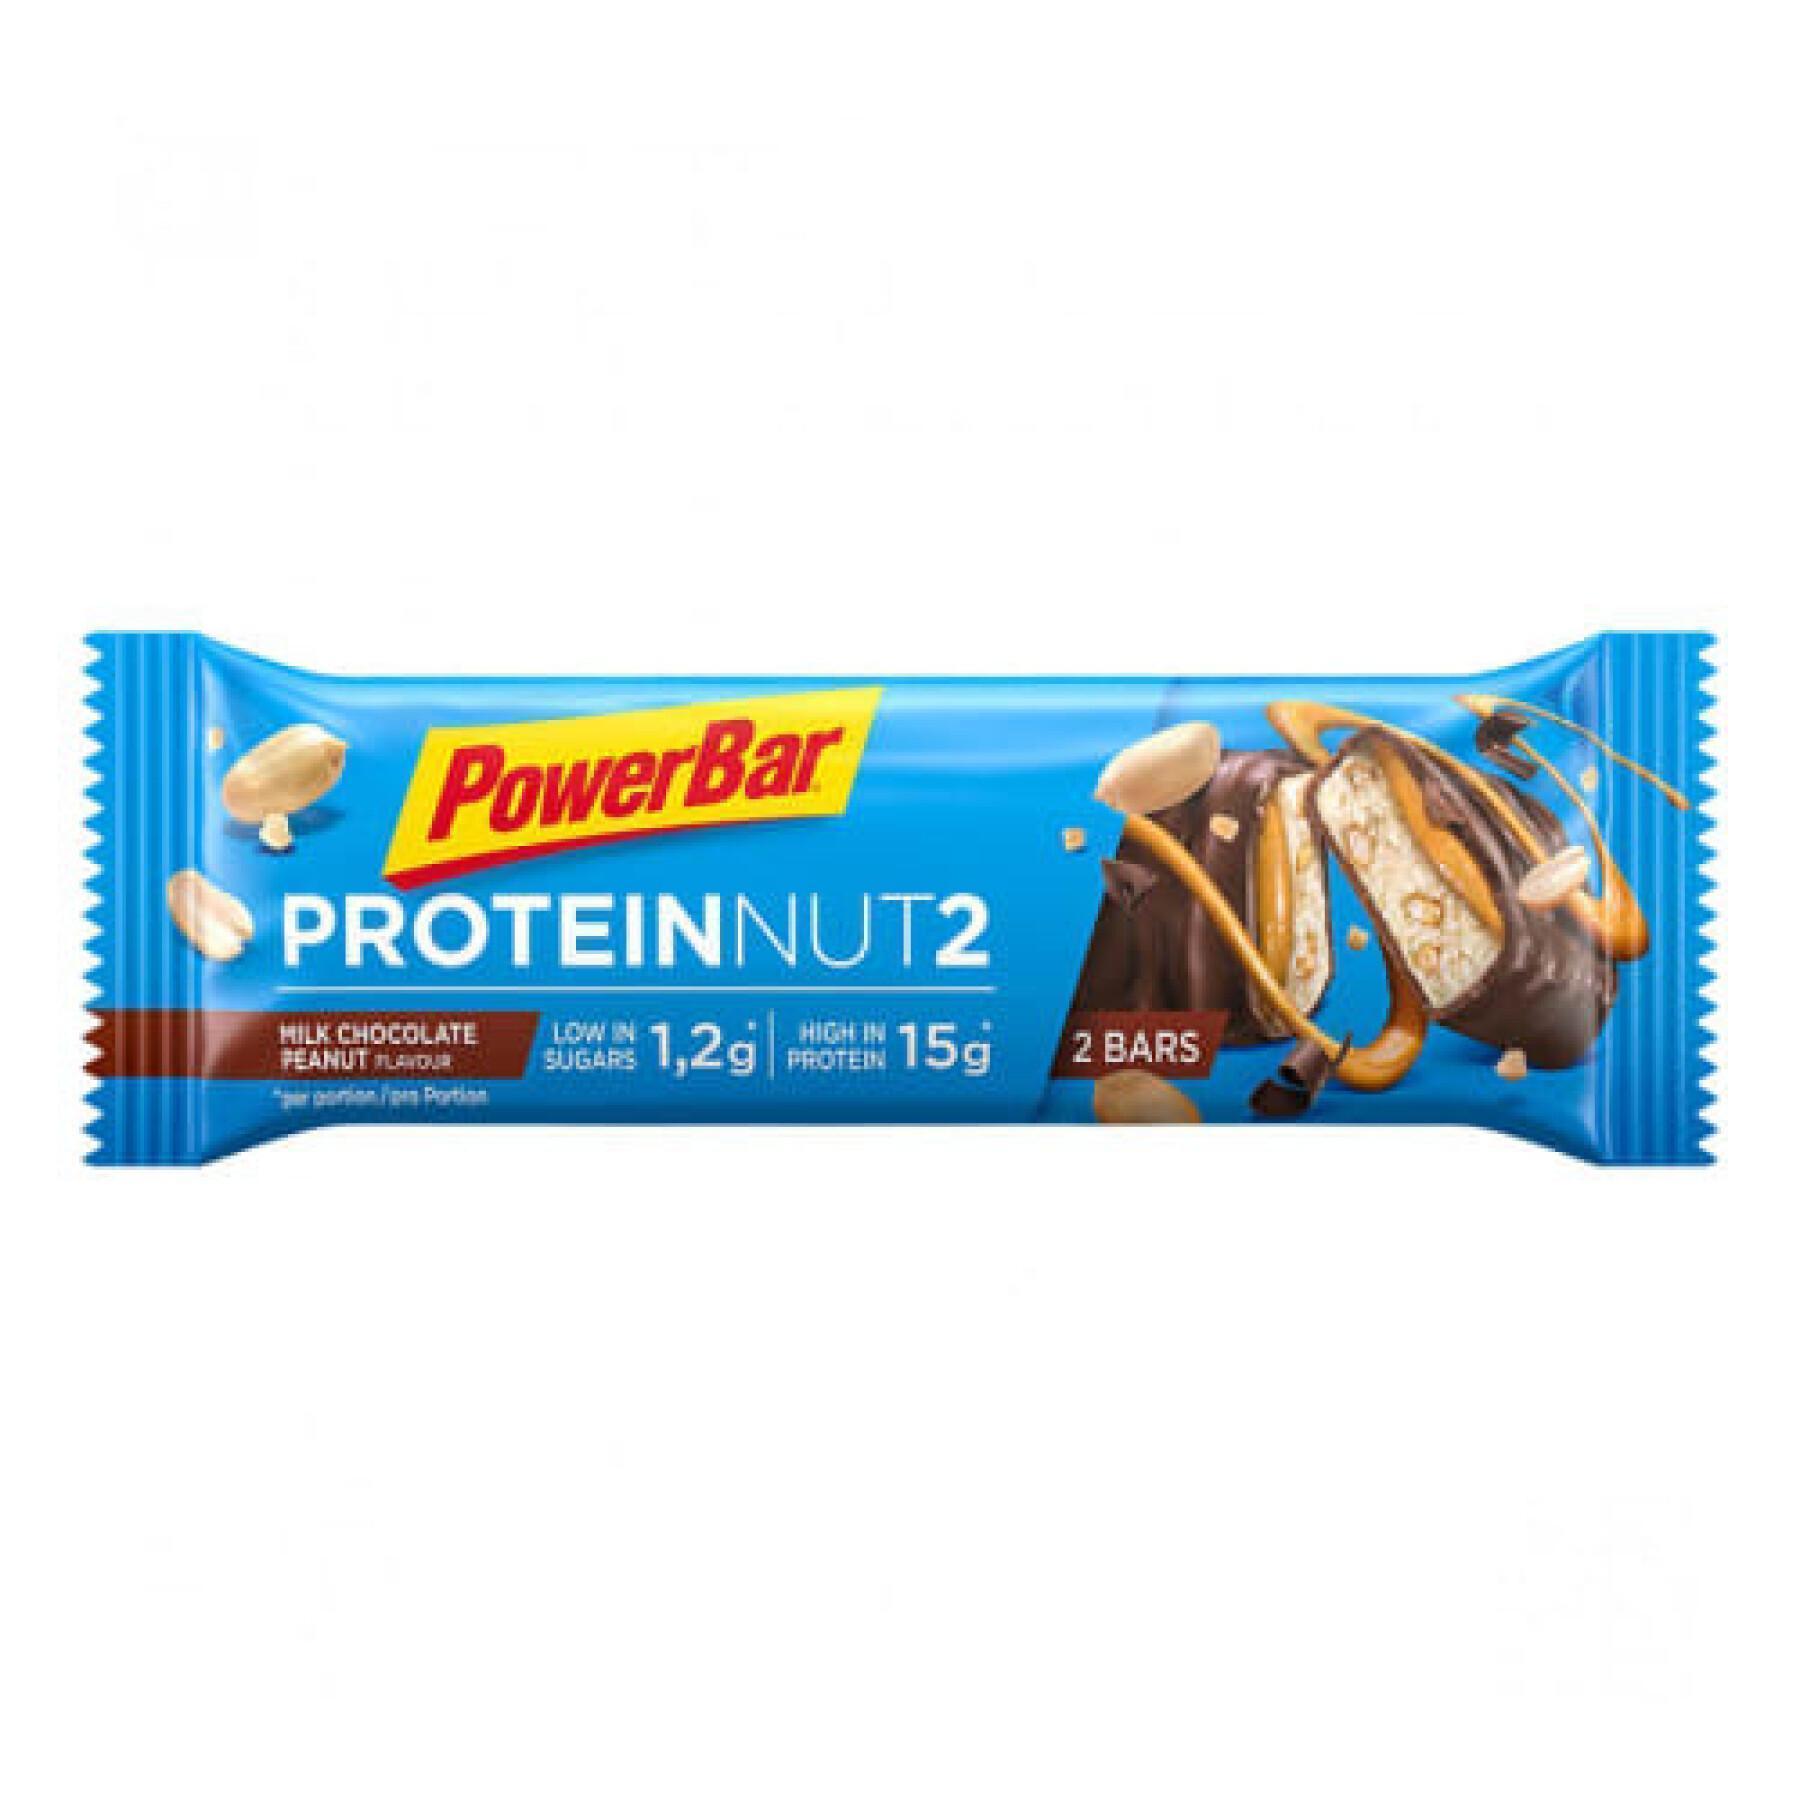 Set van 18 repen PowerBar Protein Nut2 - Milk Chocolate Peanut